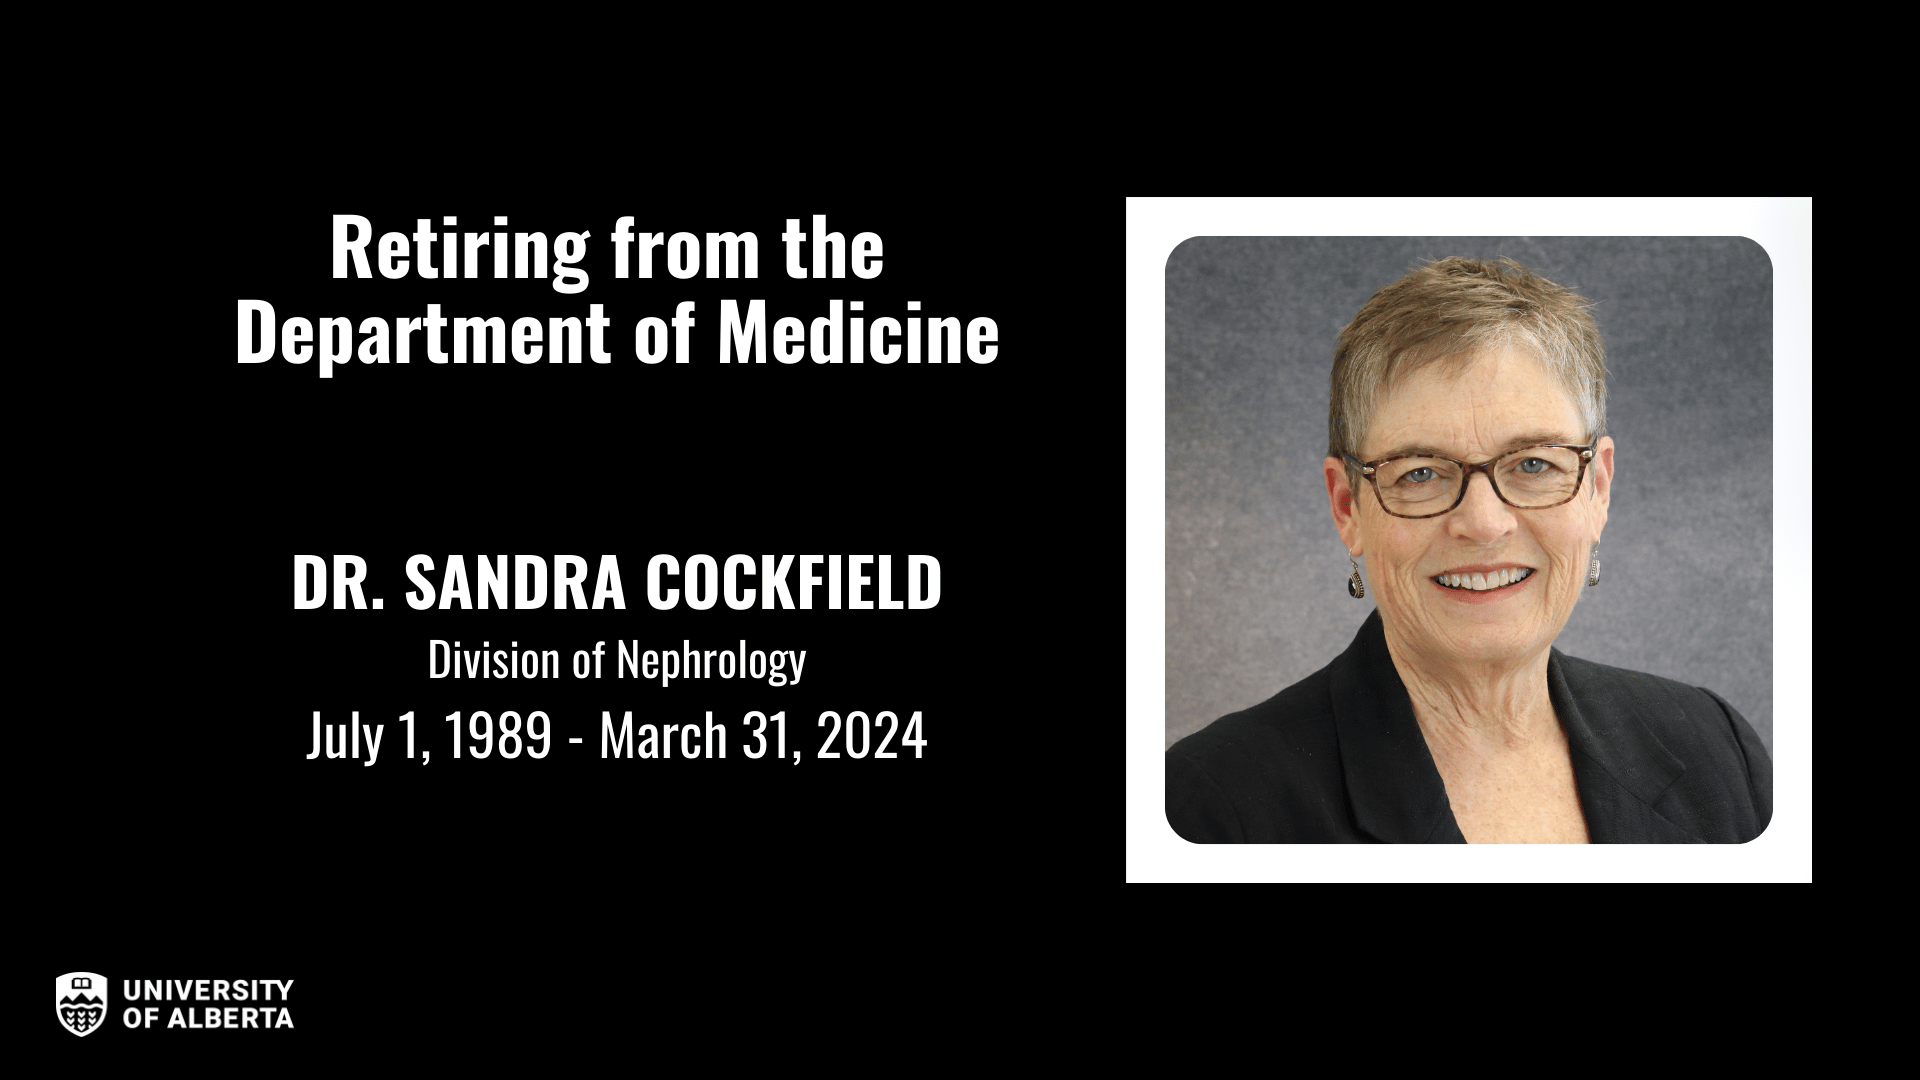 Dr. Sandra Cockfield